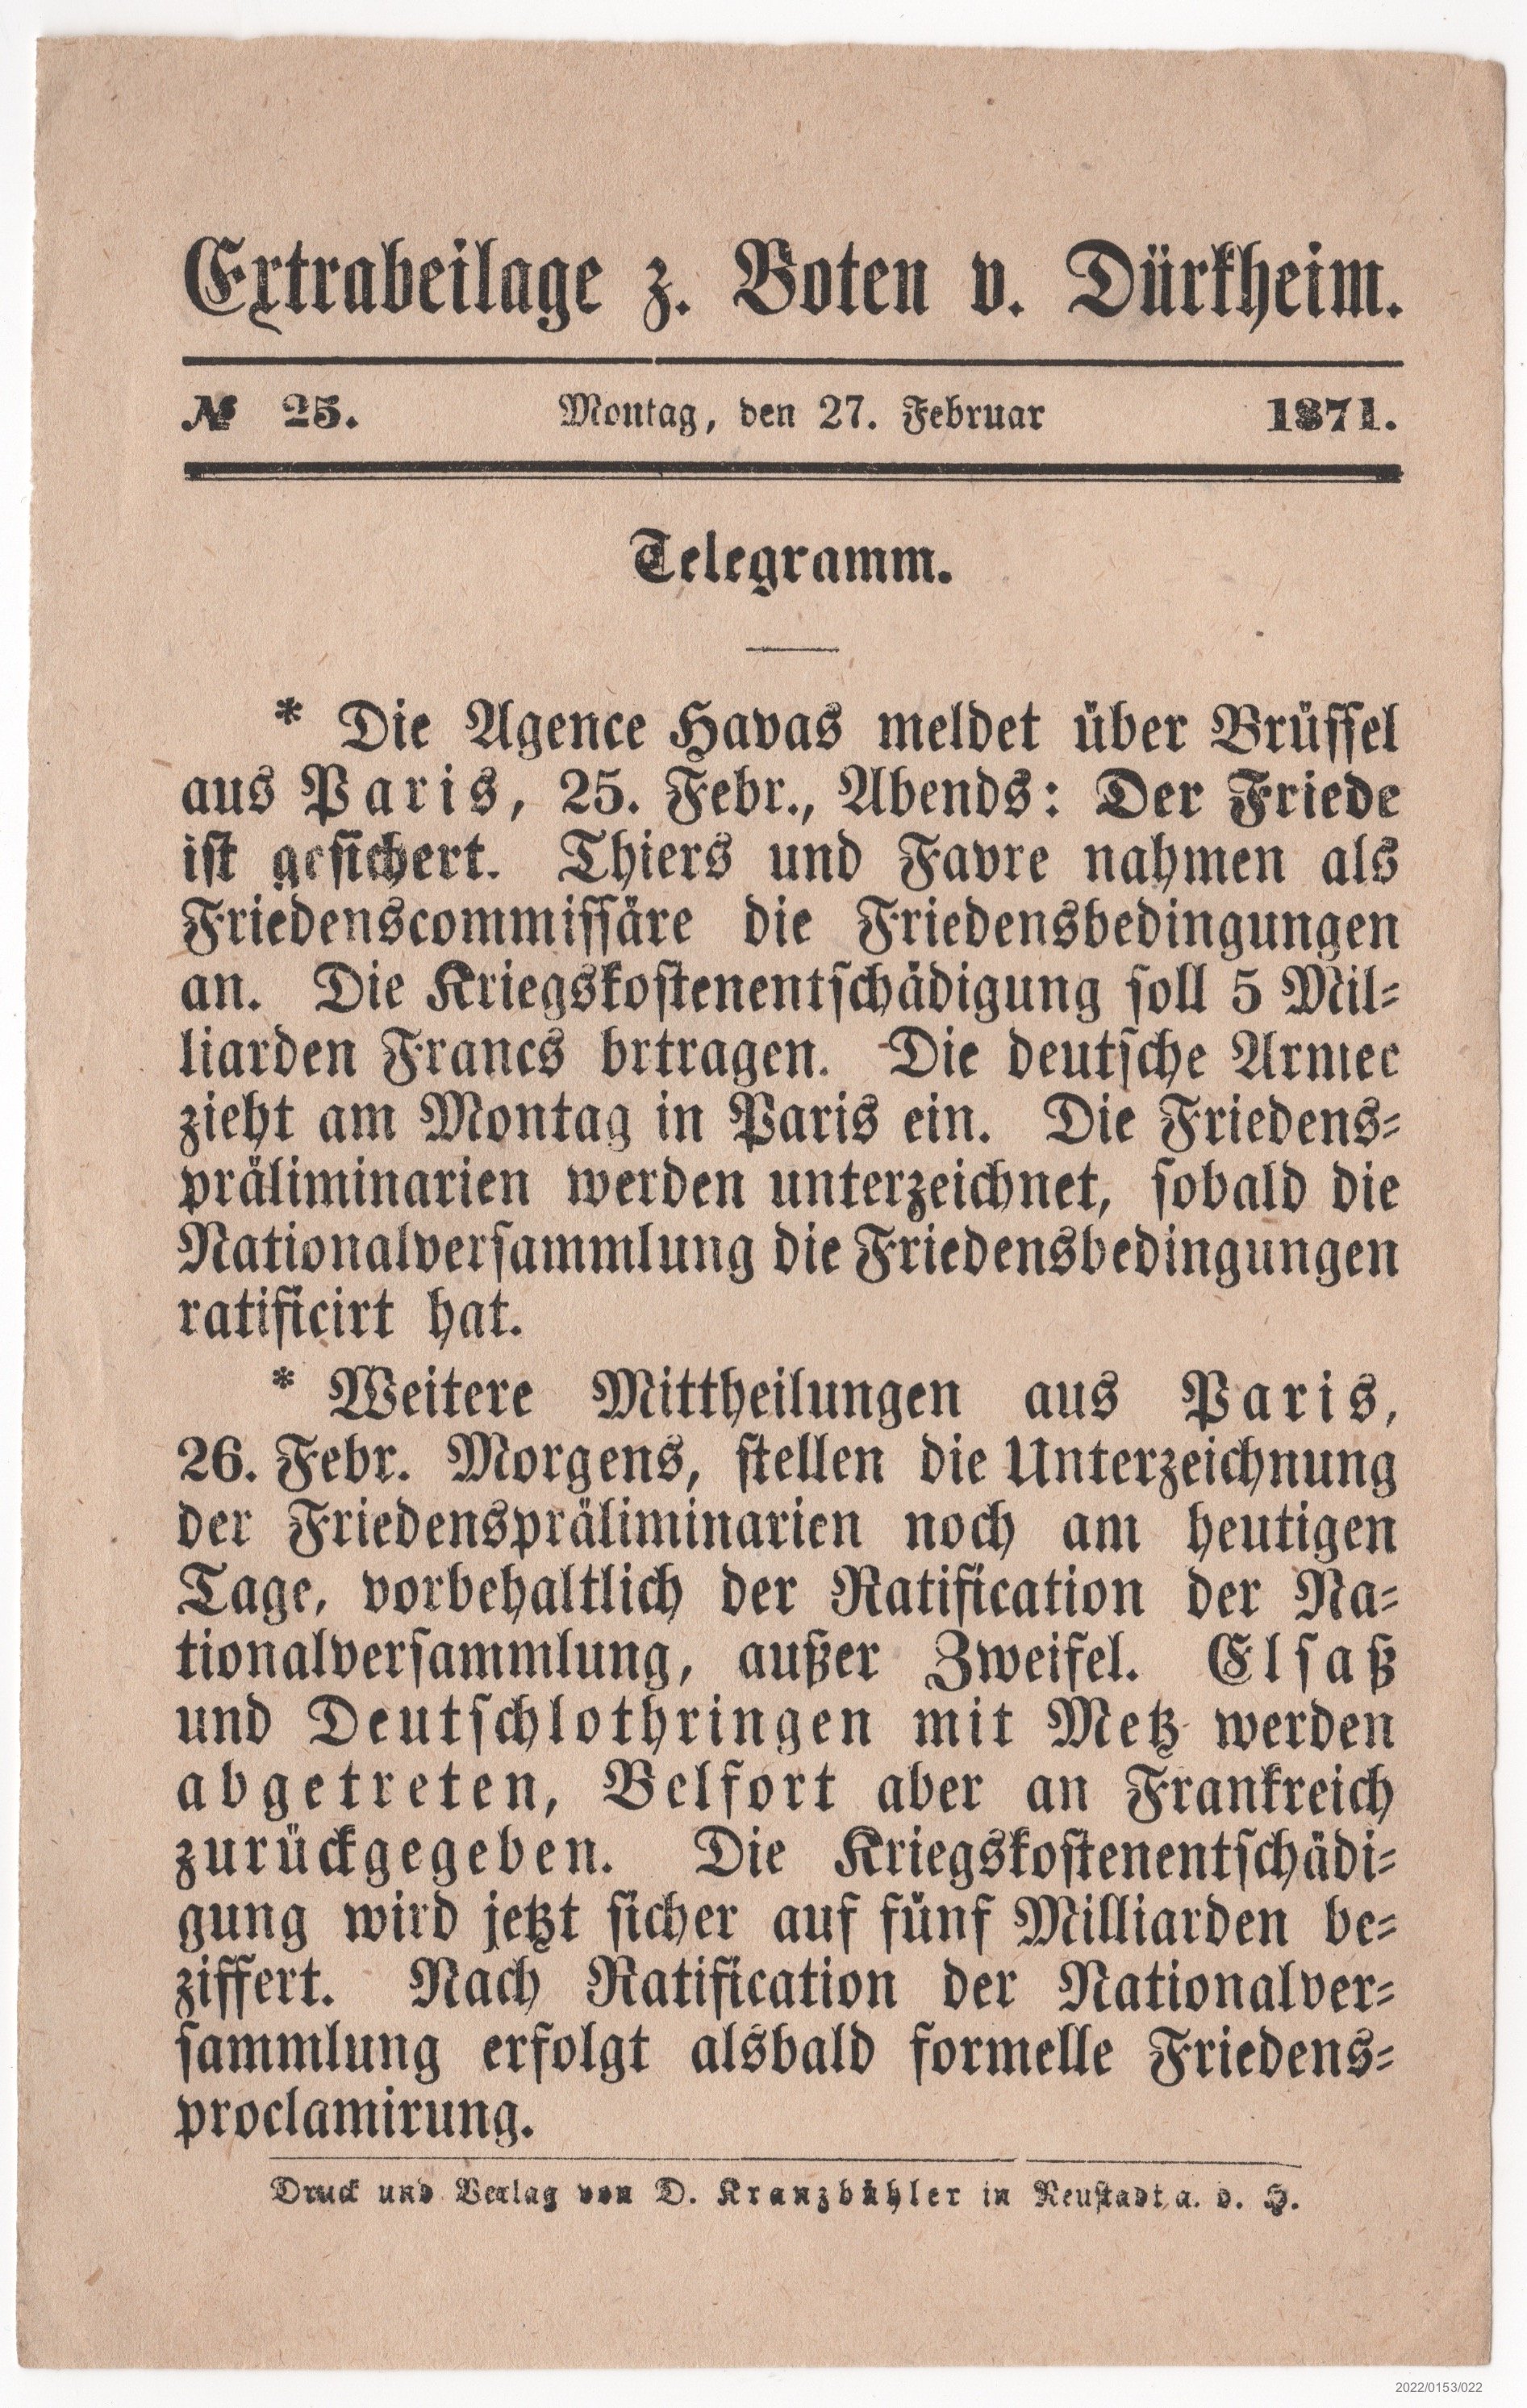 Extrabeilage zum Boten von Dürkheim No. 25 27.02.1871 (Museumsgesellschaft Bad Dürkheim e. V. CC BY-NC-SA)